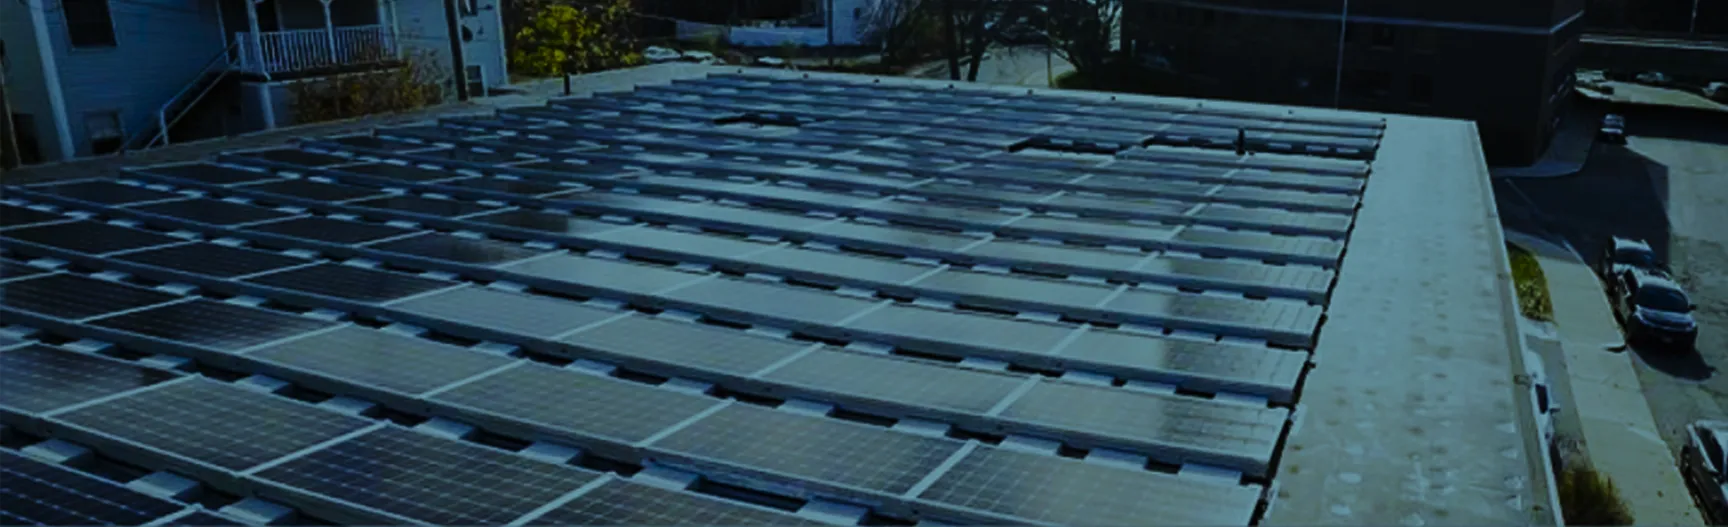 Malden YMCA rooftop solar